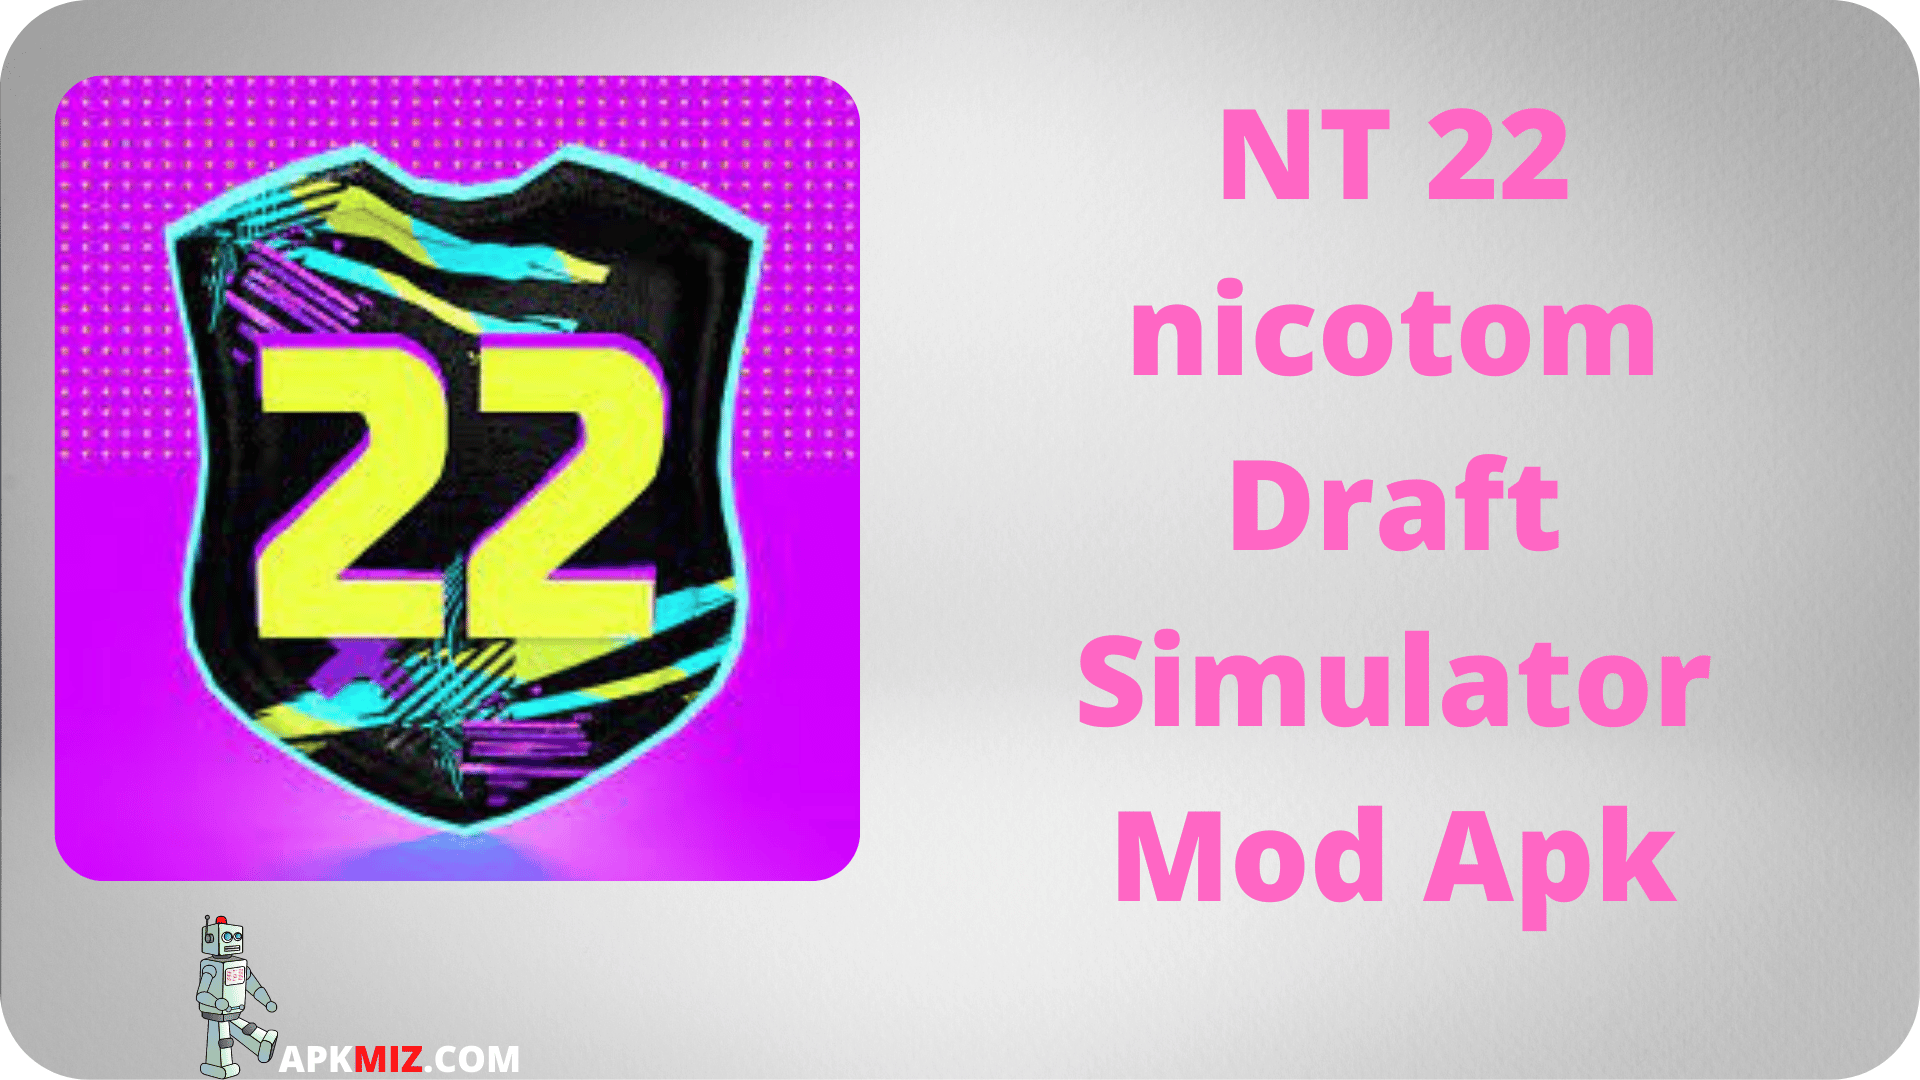 NT 22 nicotom Draft Simulator Mod Apk